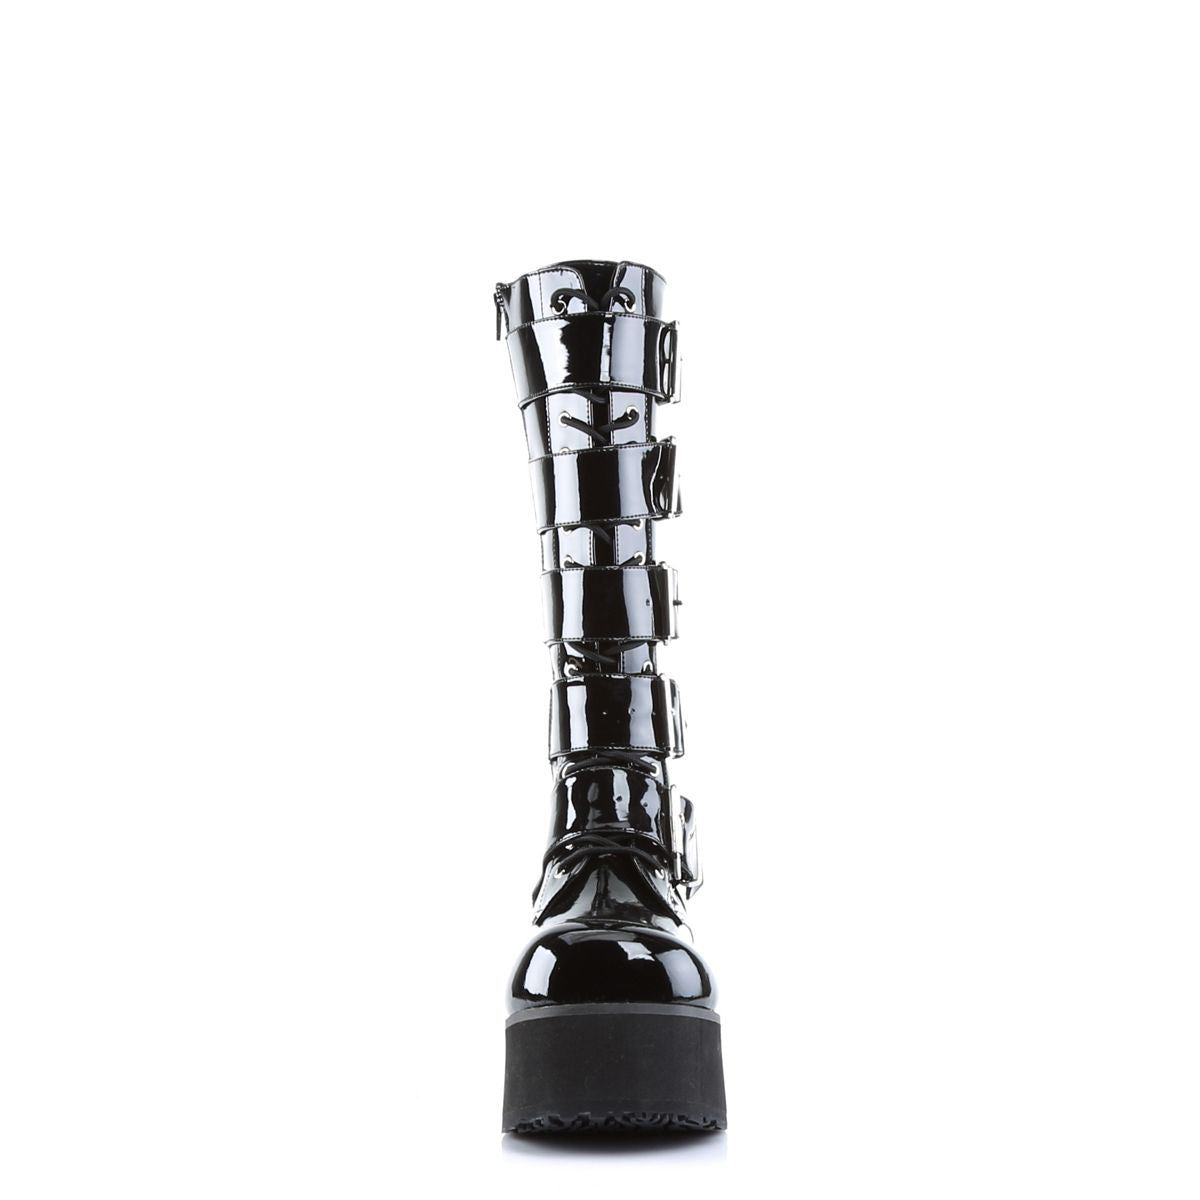 Demonia Trashville 518 Black Patent Leather Mid Calf Boots - Upperclass Fashions 